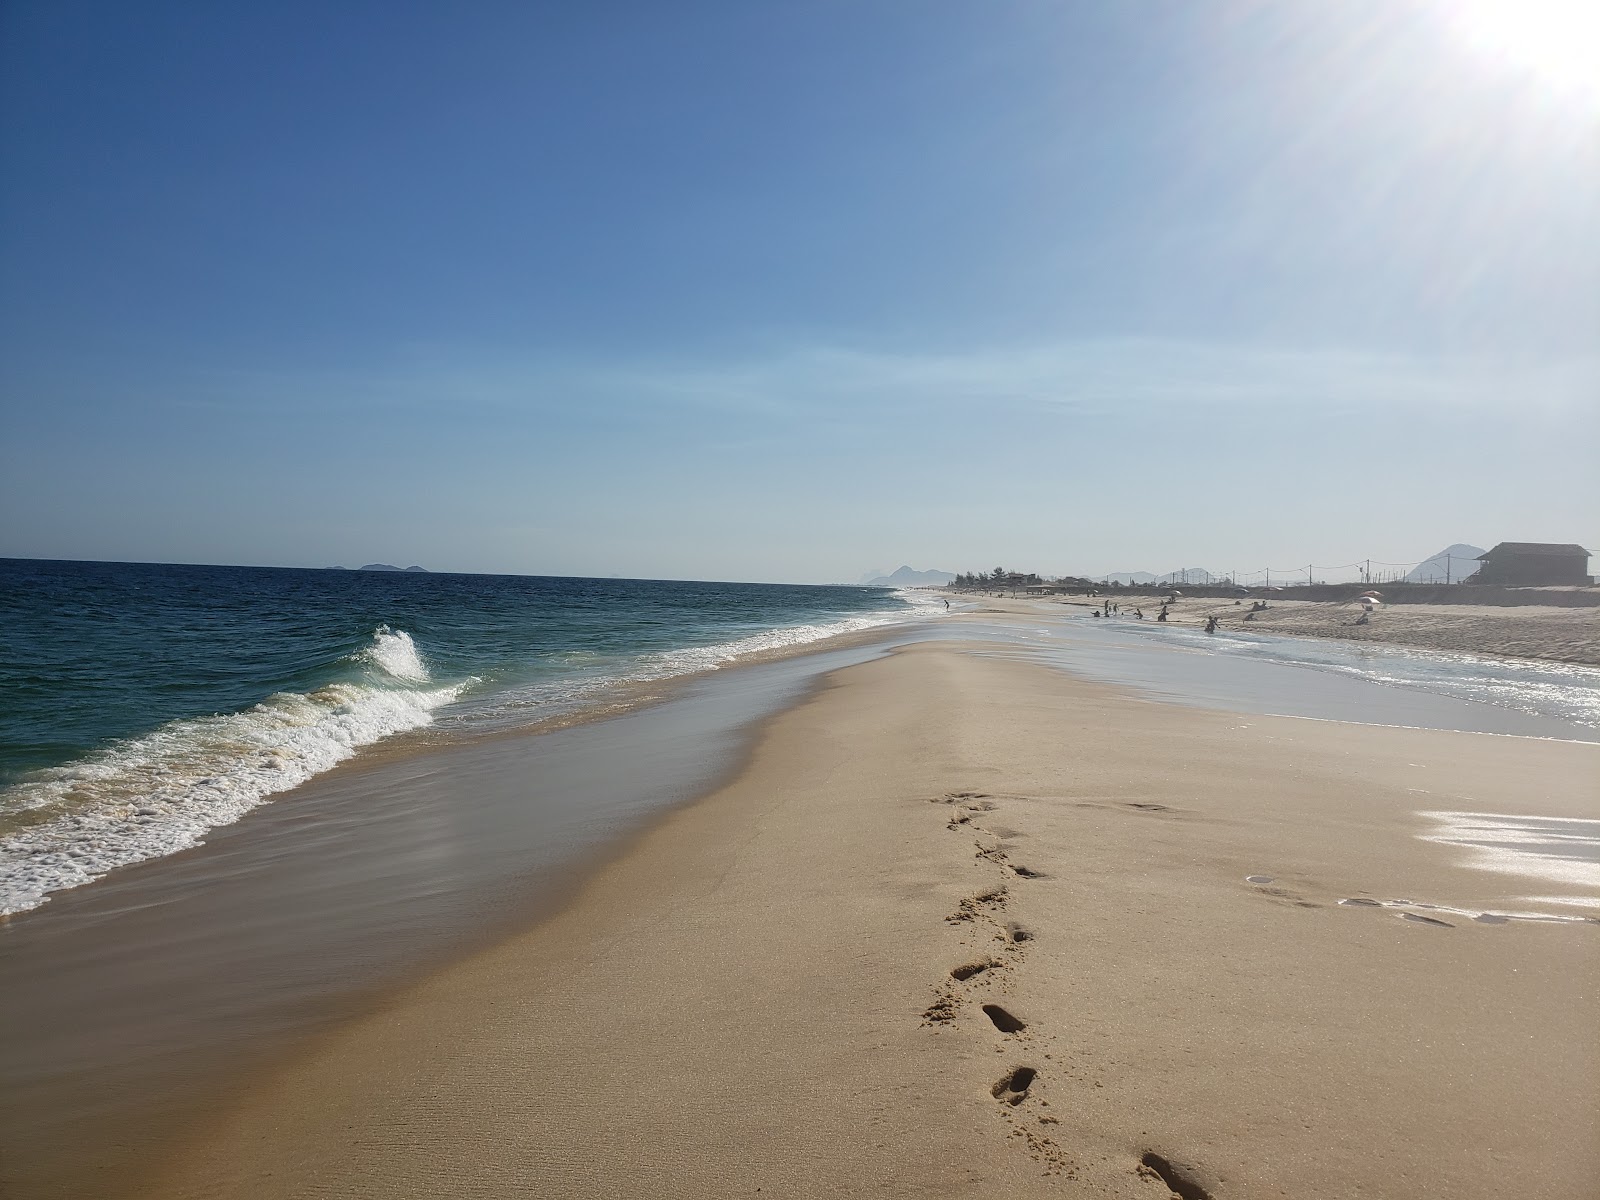 Foto de Praia da Barra em Marica con brillante arena fina superficie